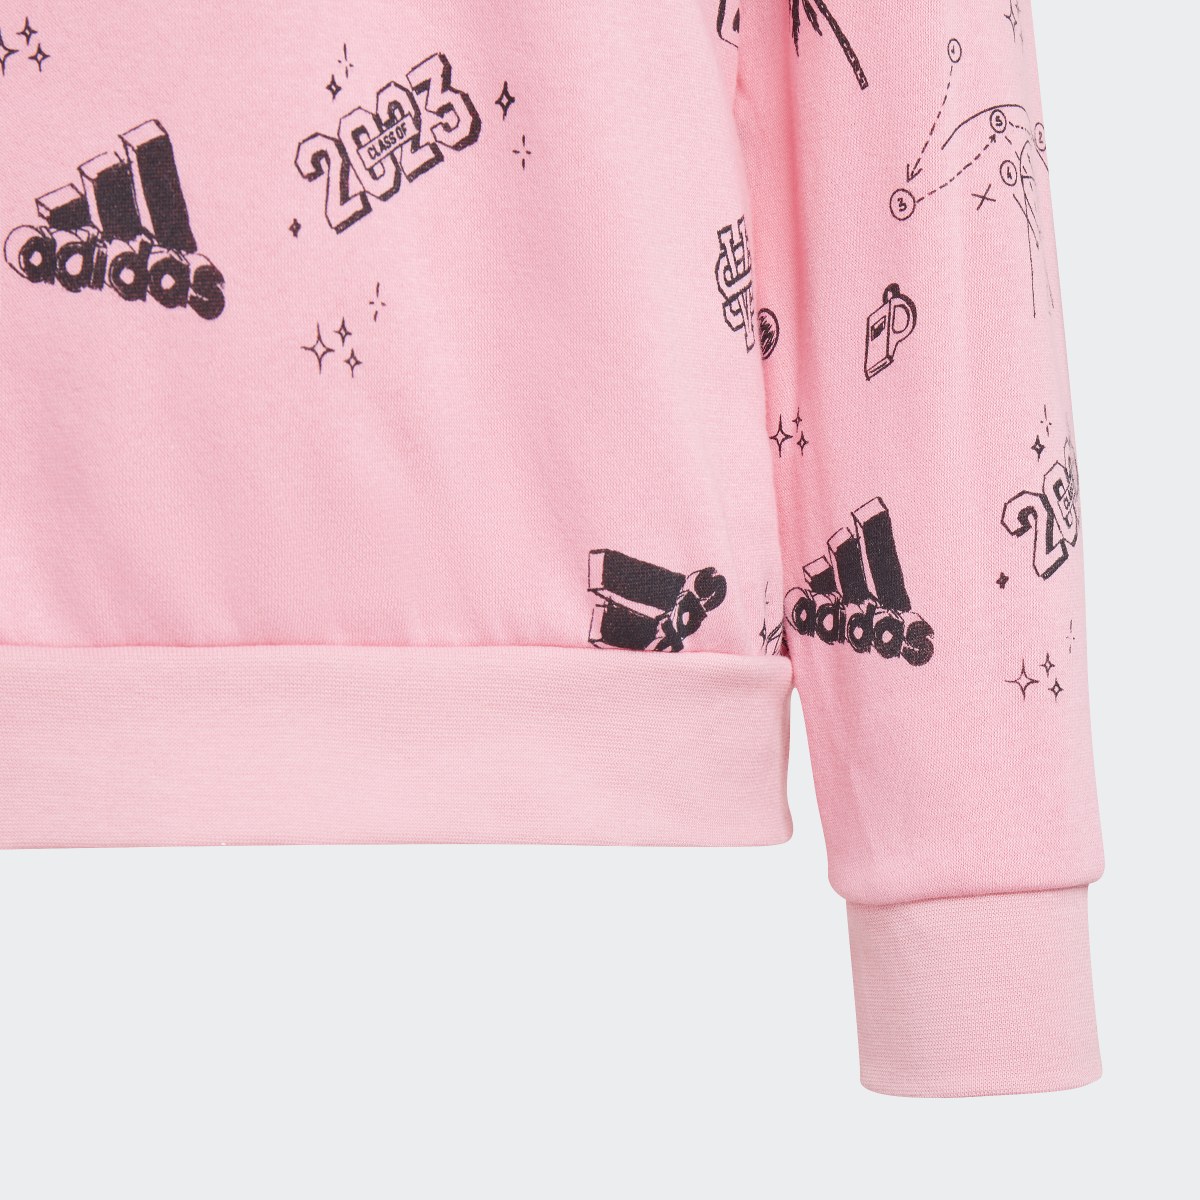 Adidas Brand Love Allover Print Kids Sweatshirt. 5